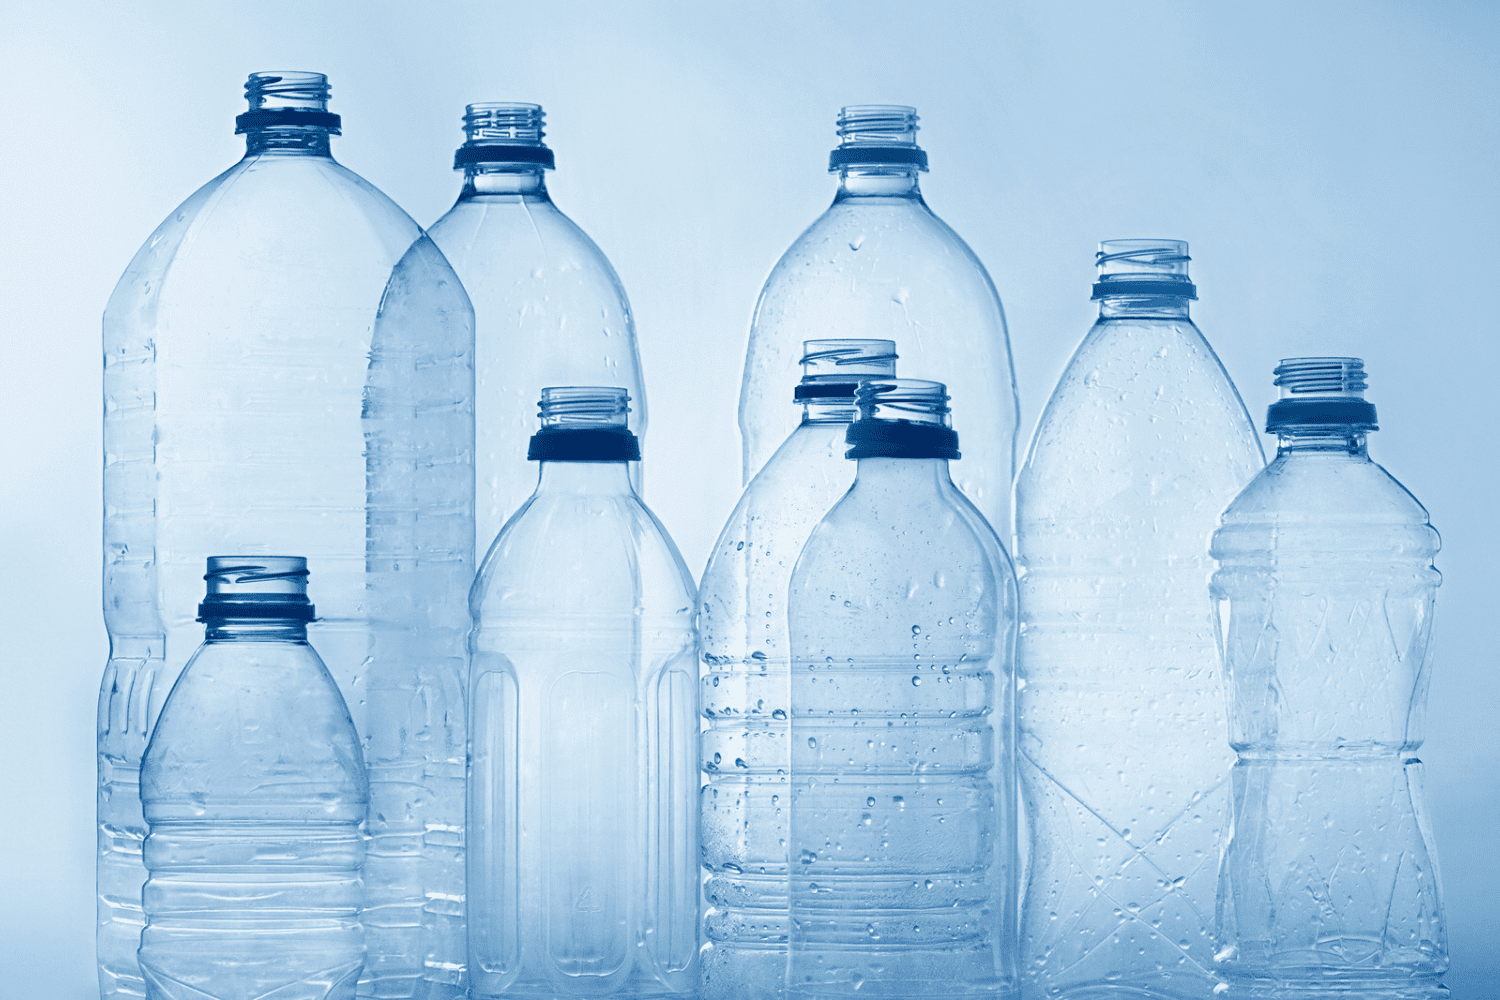 reusing plastic bottles for science activities